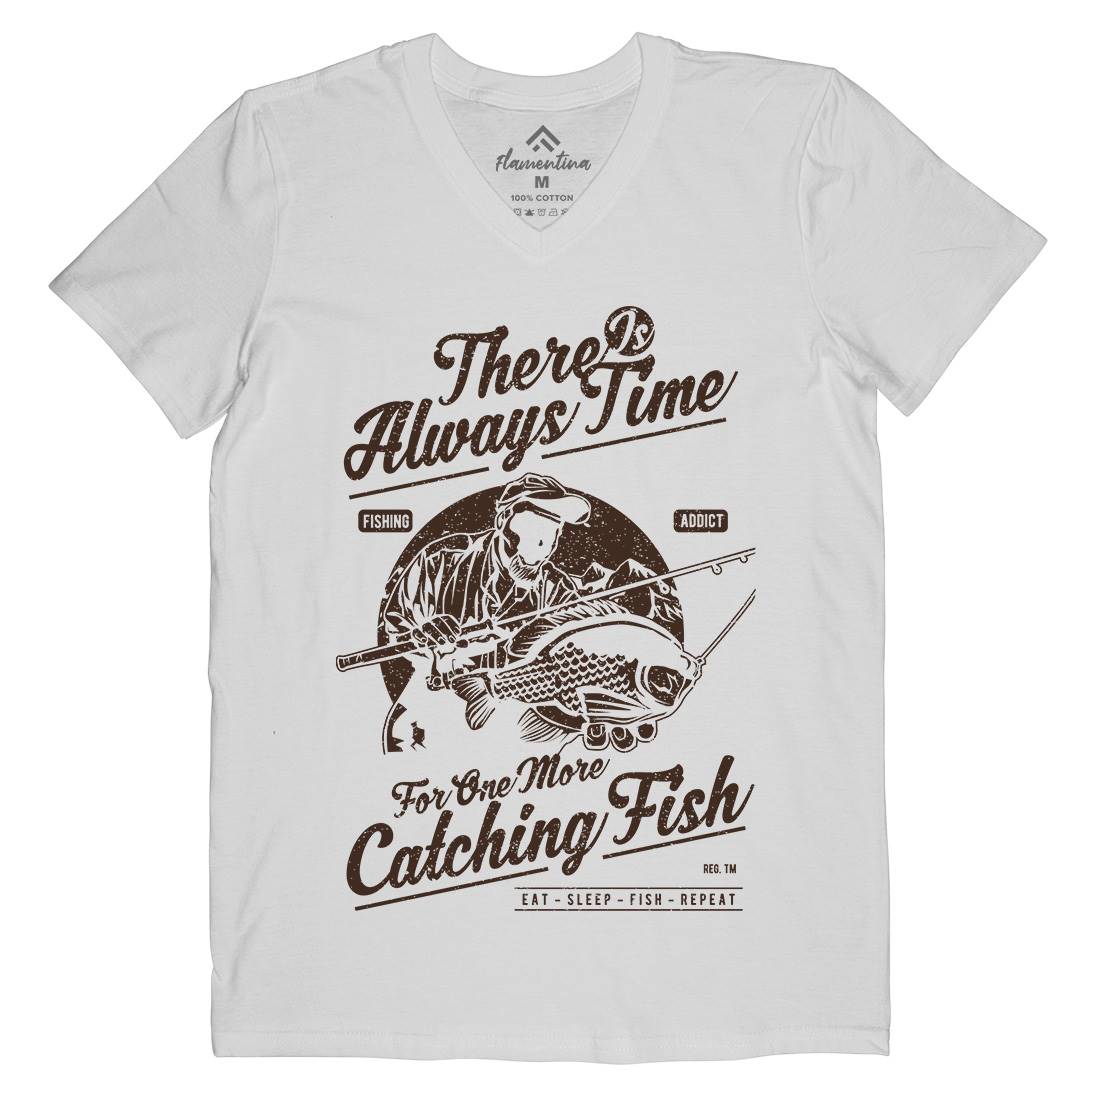 One More Catching Mens Organic V-Neck T-Shirt Fishing A731